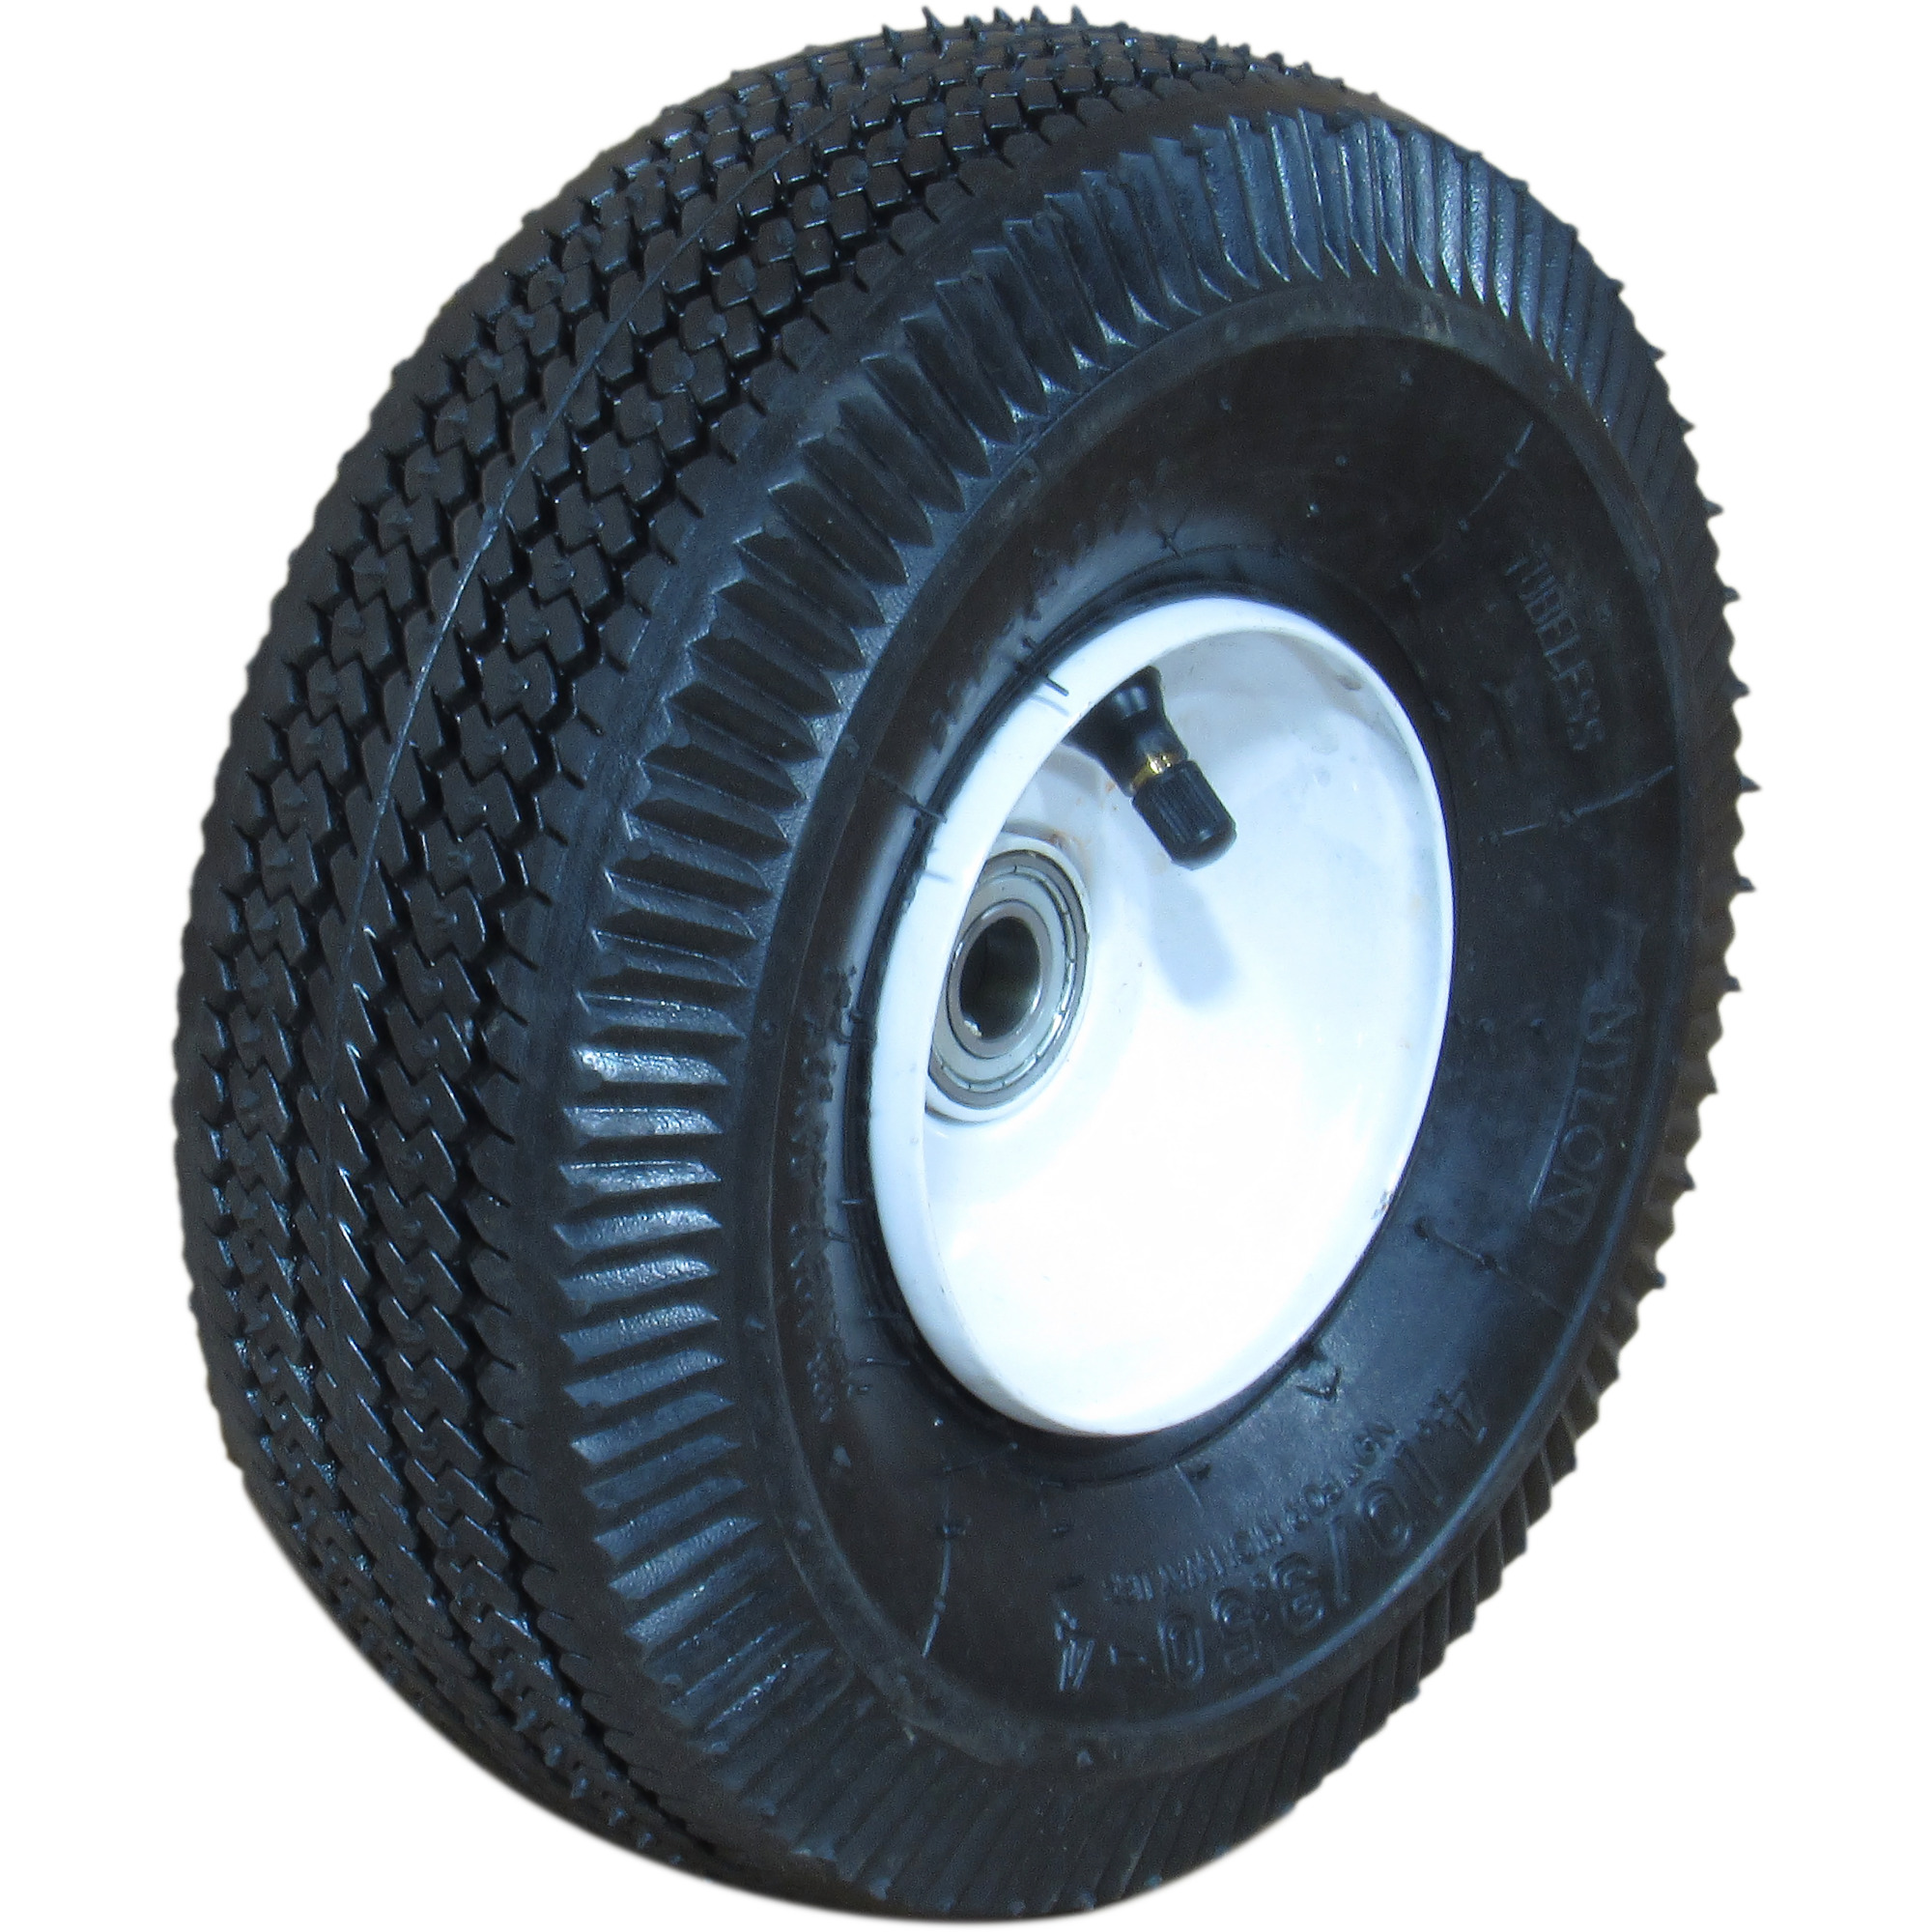 HI-RUN, Wheelbarrow Tire Assembly, Sawtooth, 5/8Inch bearings, Tire Size 4.10/3.50-4 Load Range Rating B, Model CT1009